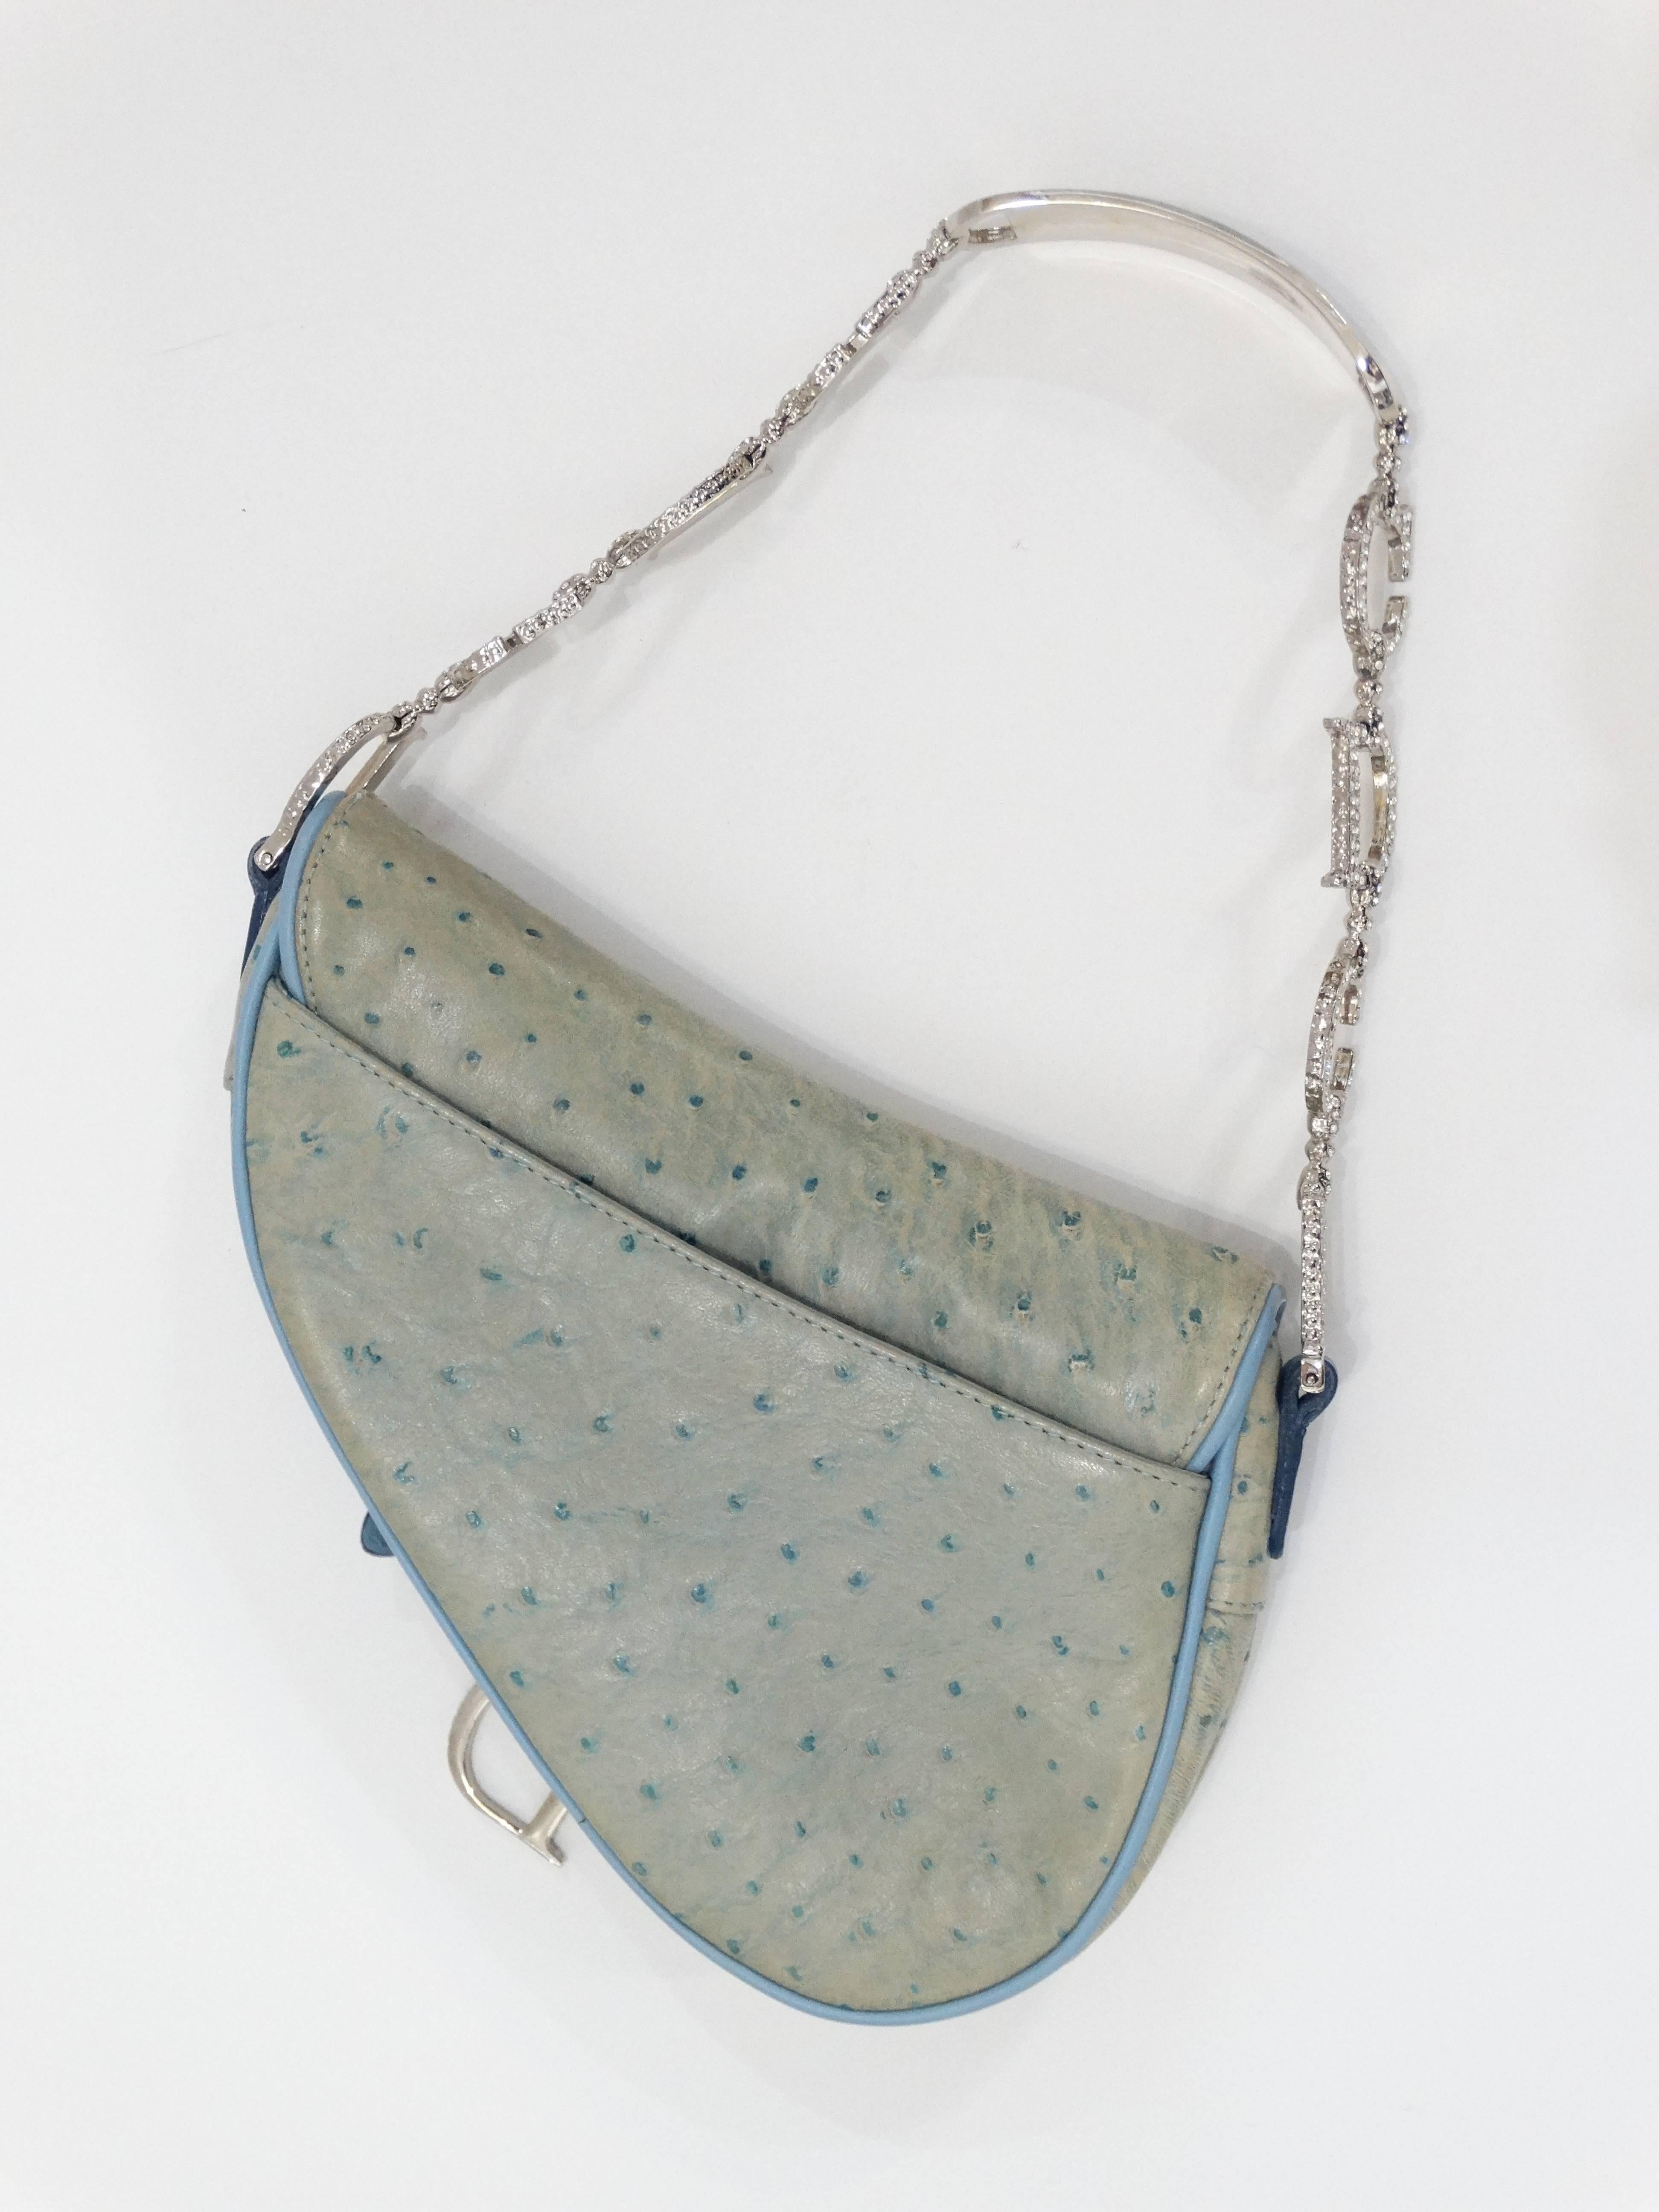 Christian Dior 'Saddle' Bag in Pastellblau in Strauß mit Strass-CD-Hardware (Grau)